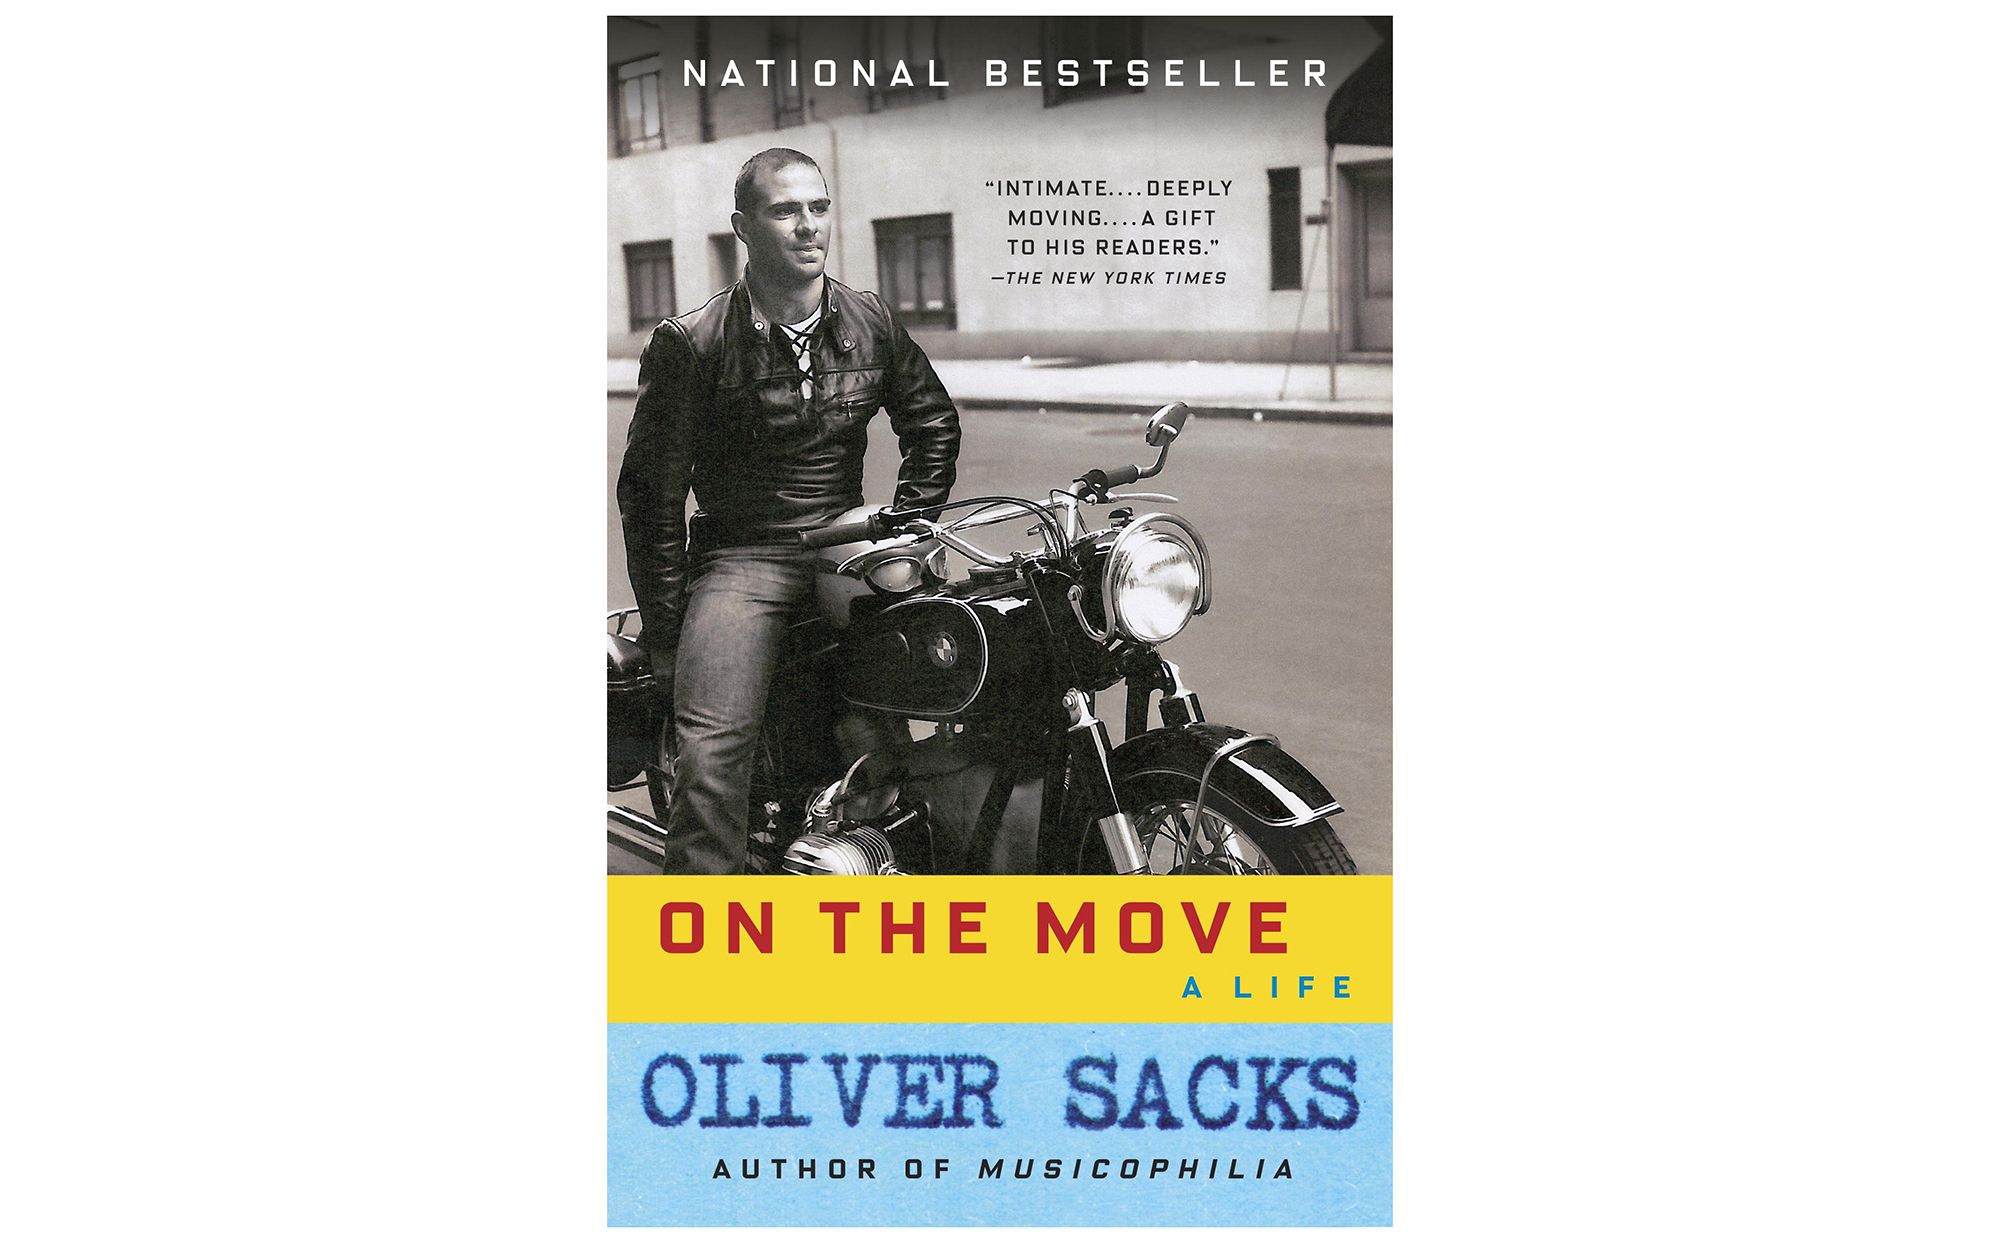 On the Move: A Life, avtor Oliver Sacks